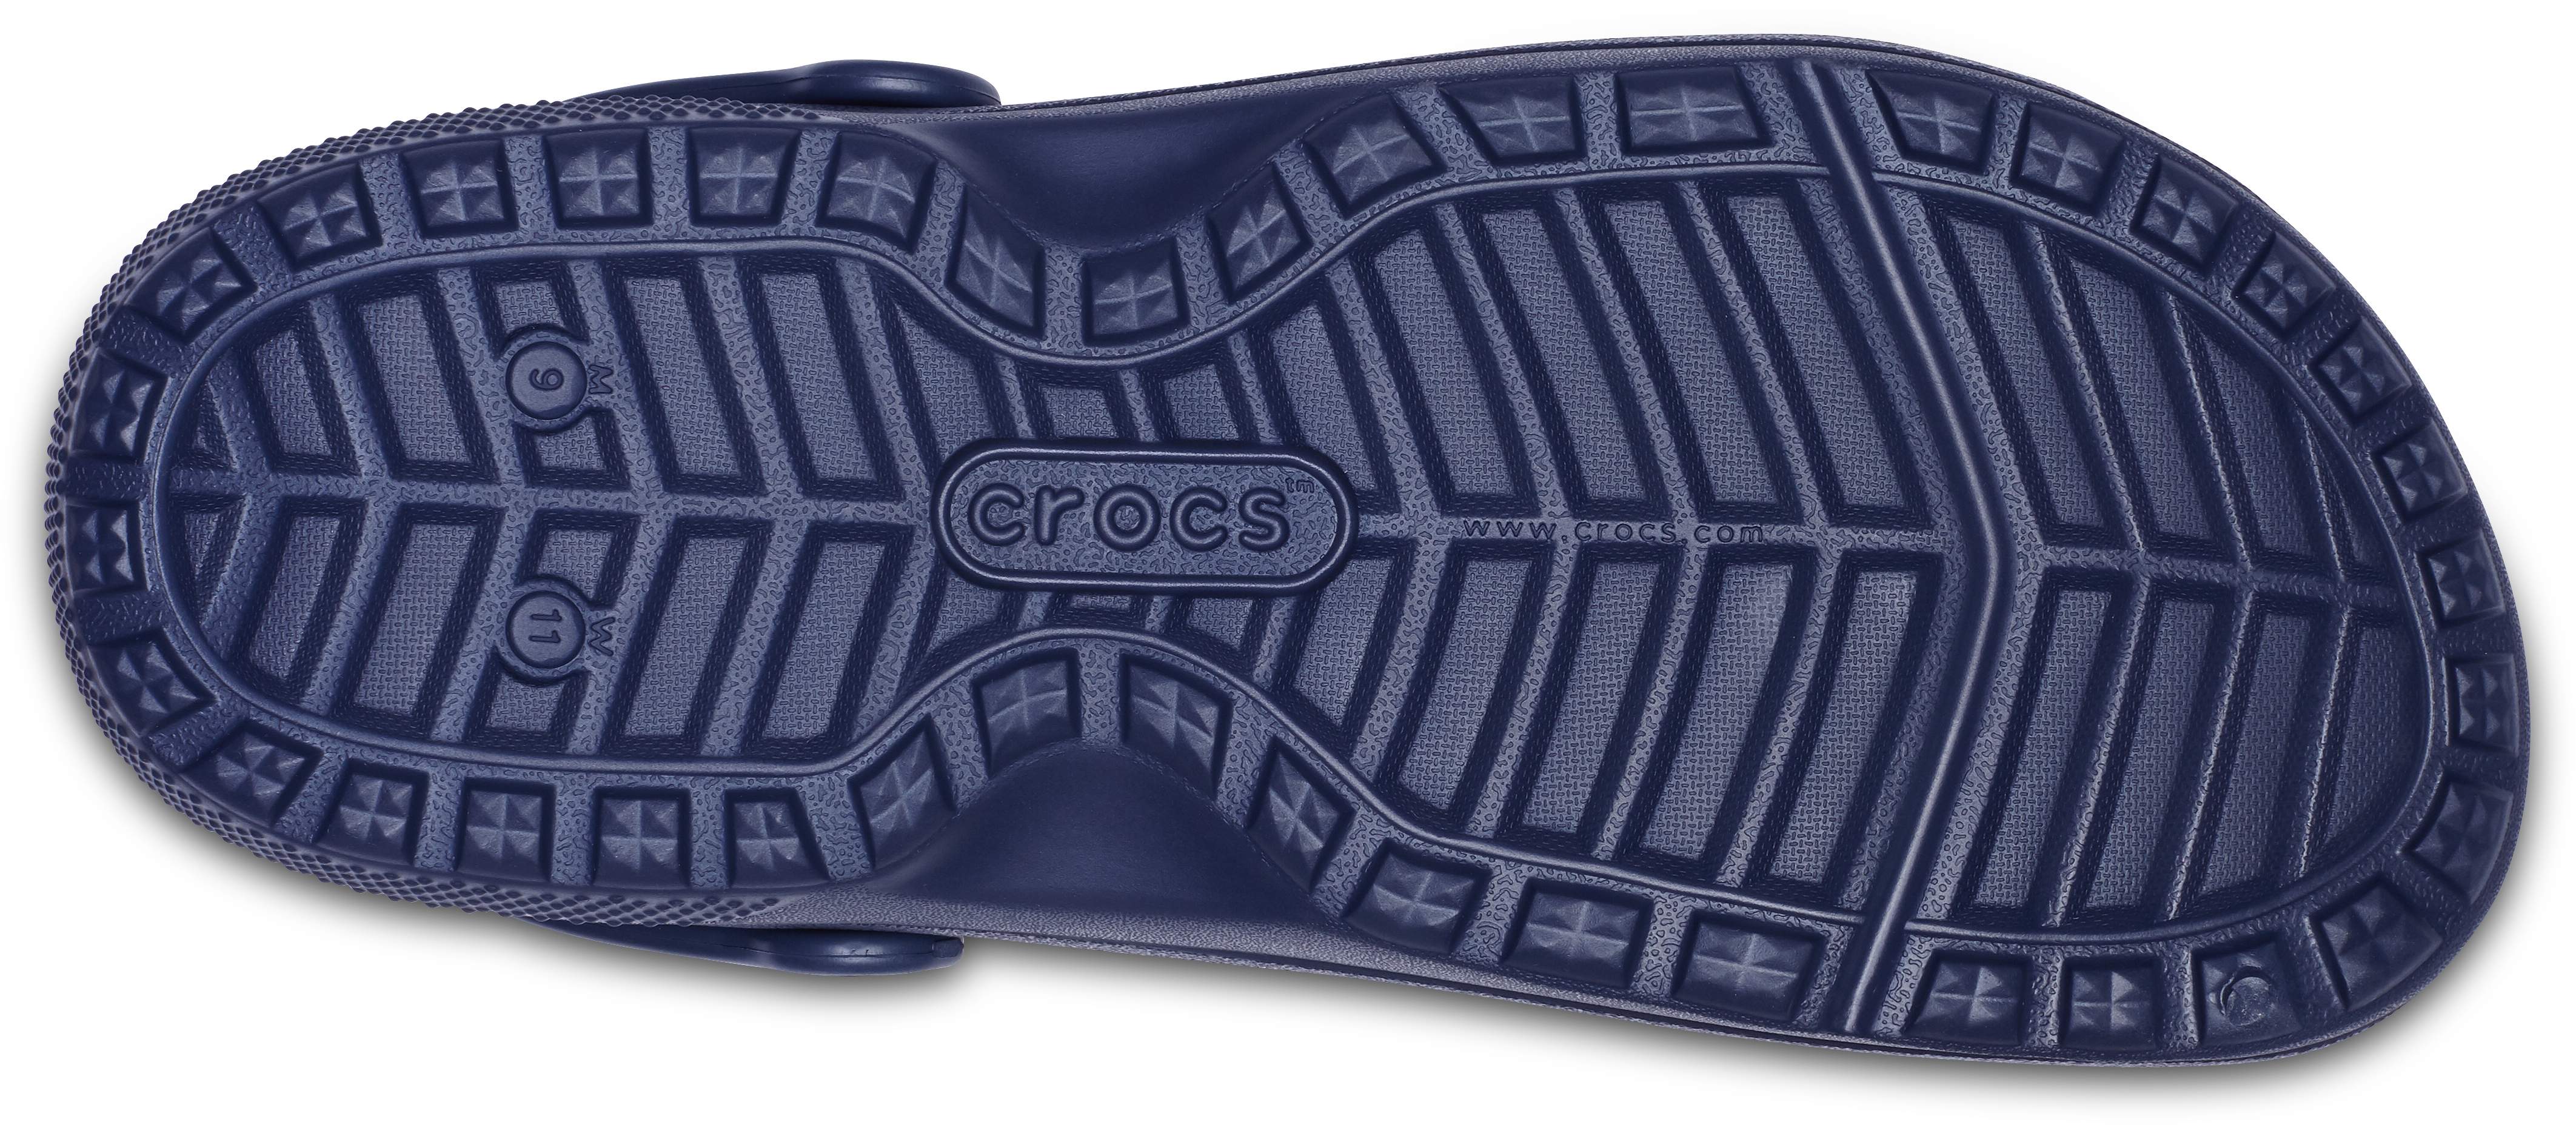 are crocs good walking shoes